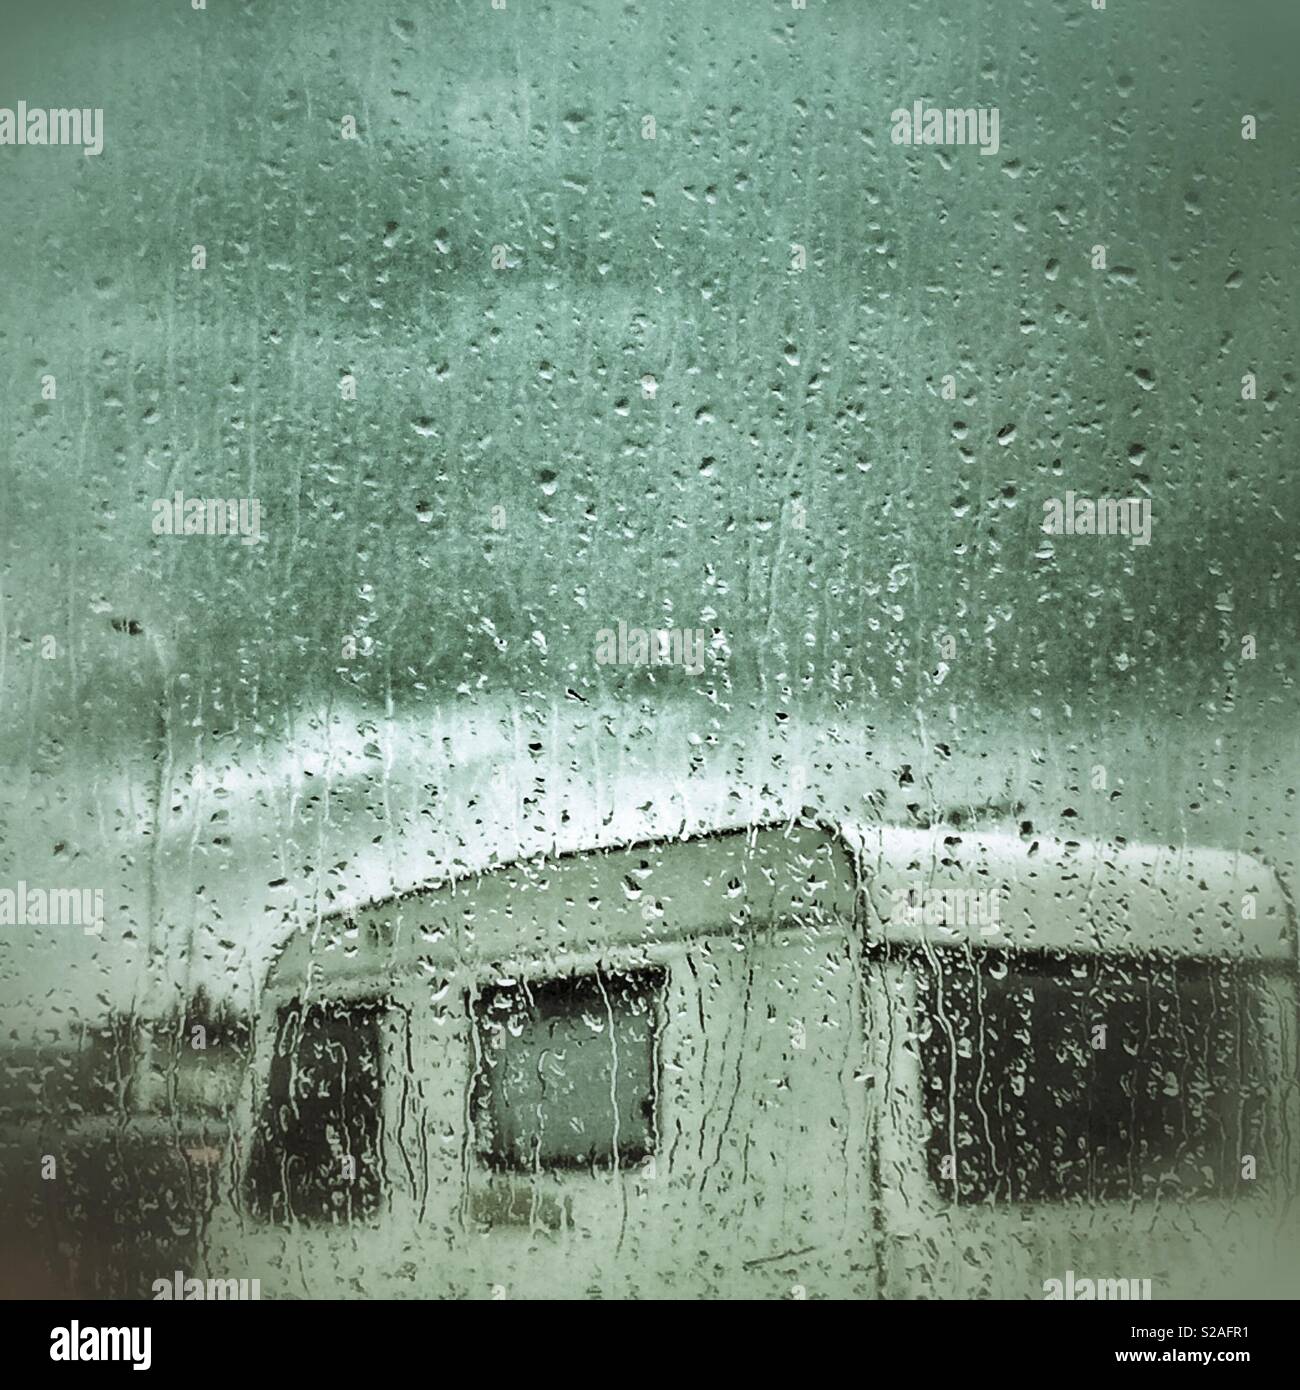 A caravan holiday in the rain - UK summer weather- Bank holiday raining - window rain Stock Photo